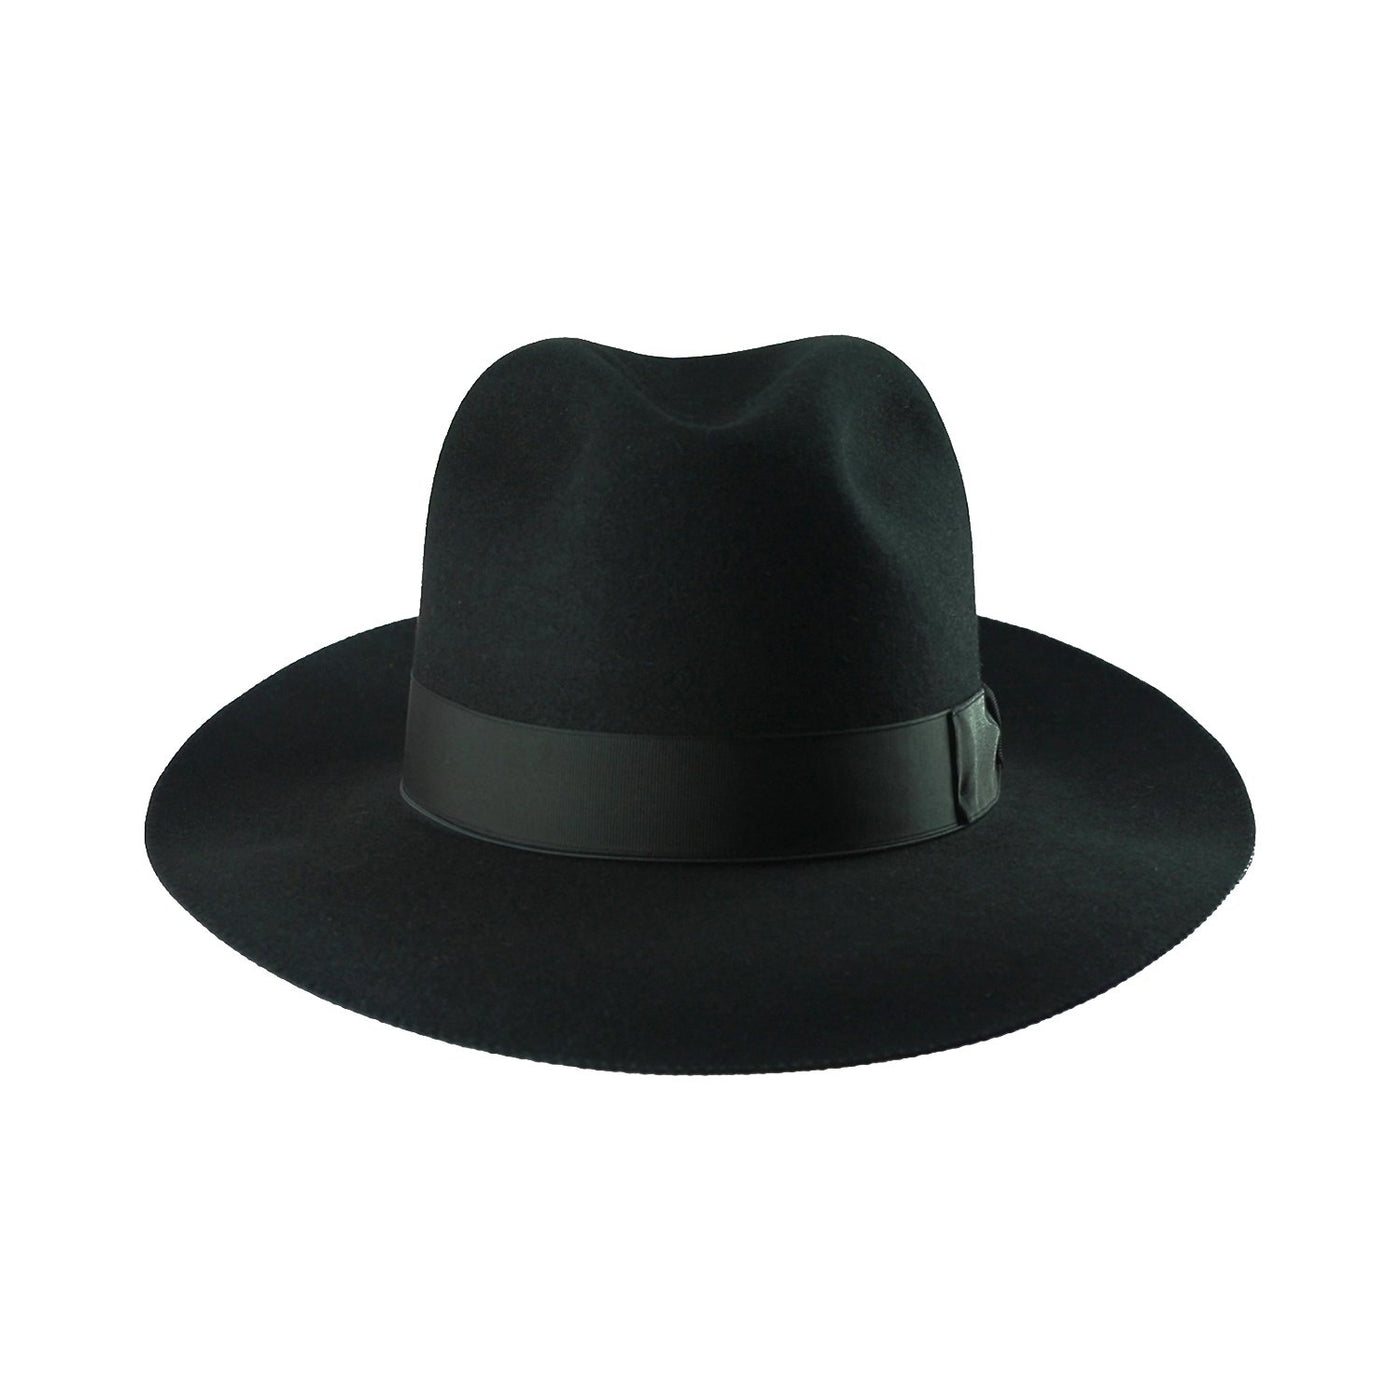 Mattoni 300 - Black, product_type] - Borsalino for Atica fedora hat